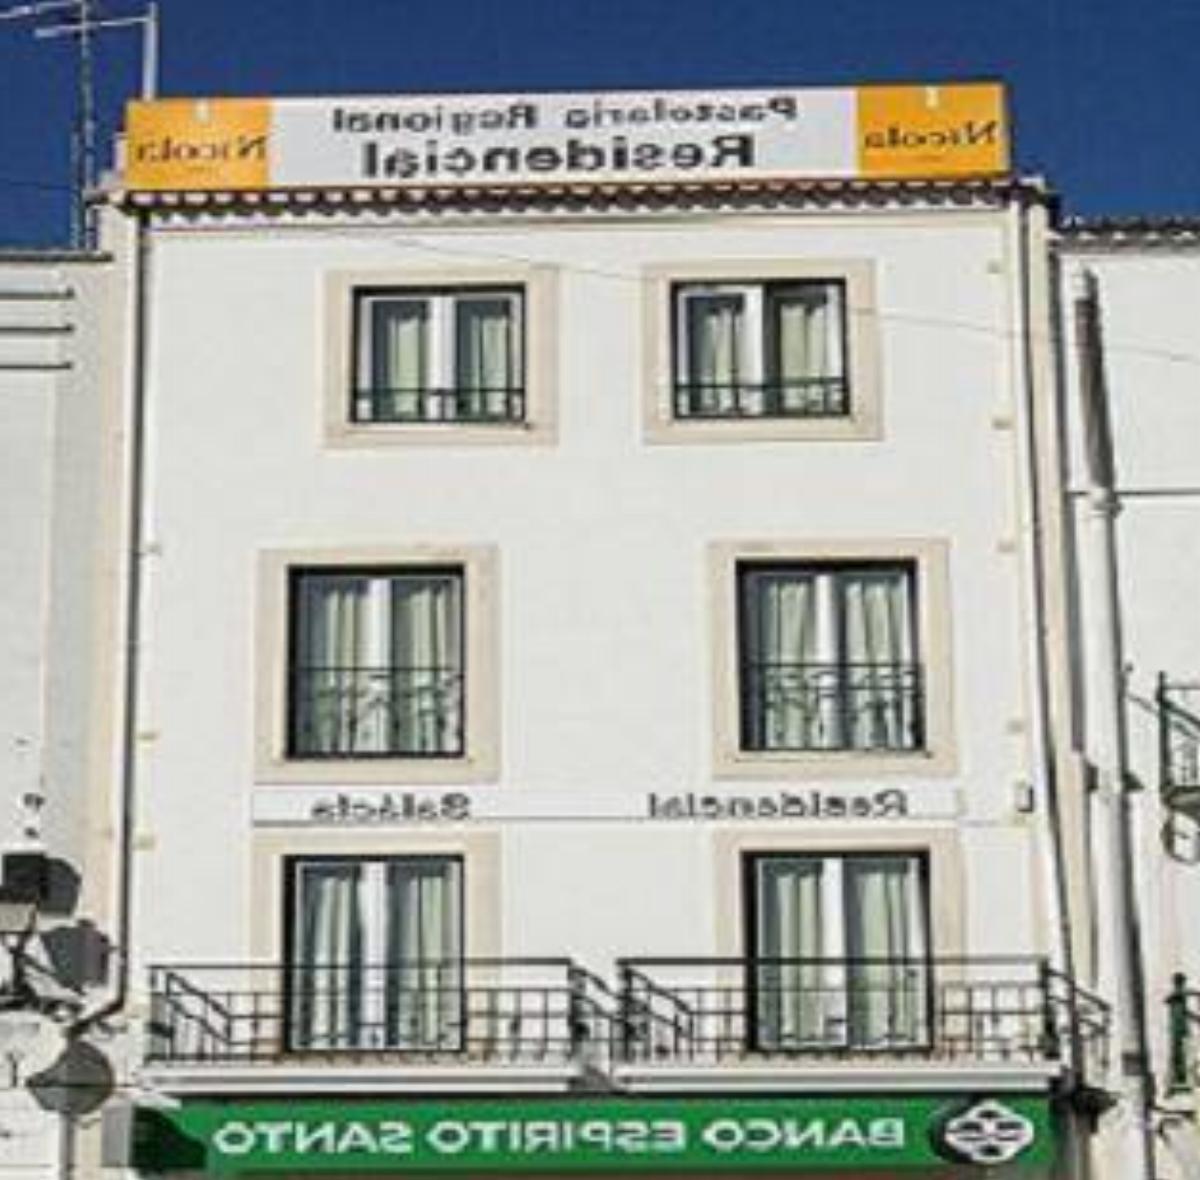 Hotel Salatia Hotel Alcácer do Sal Portugal